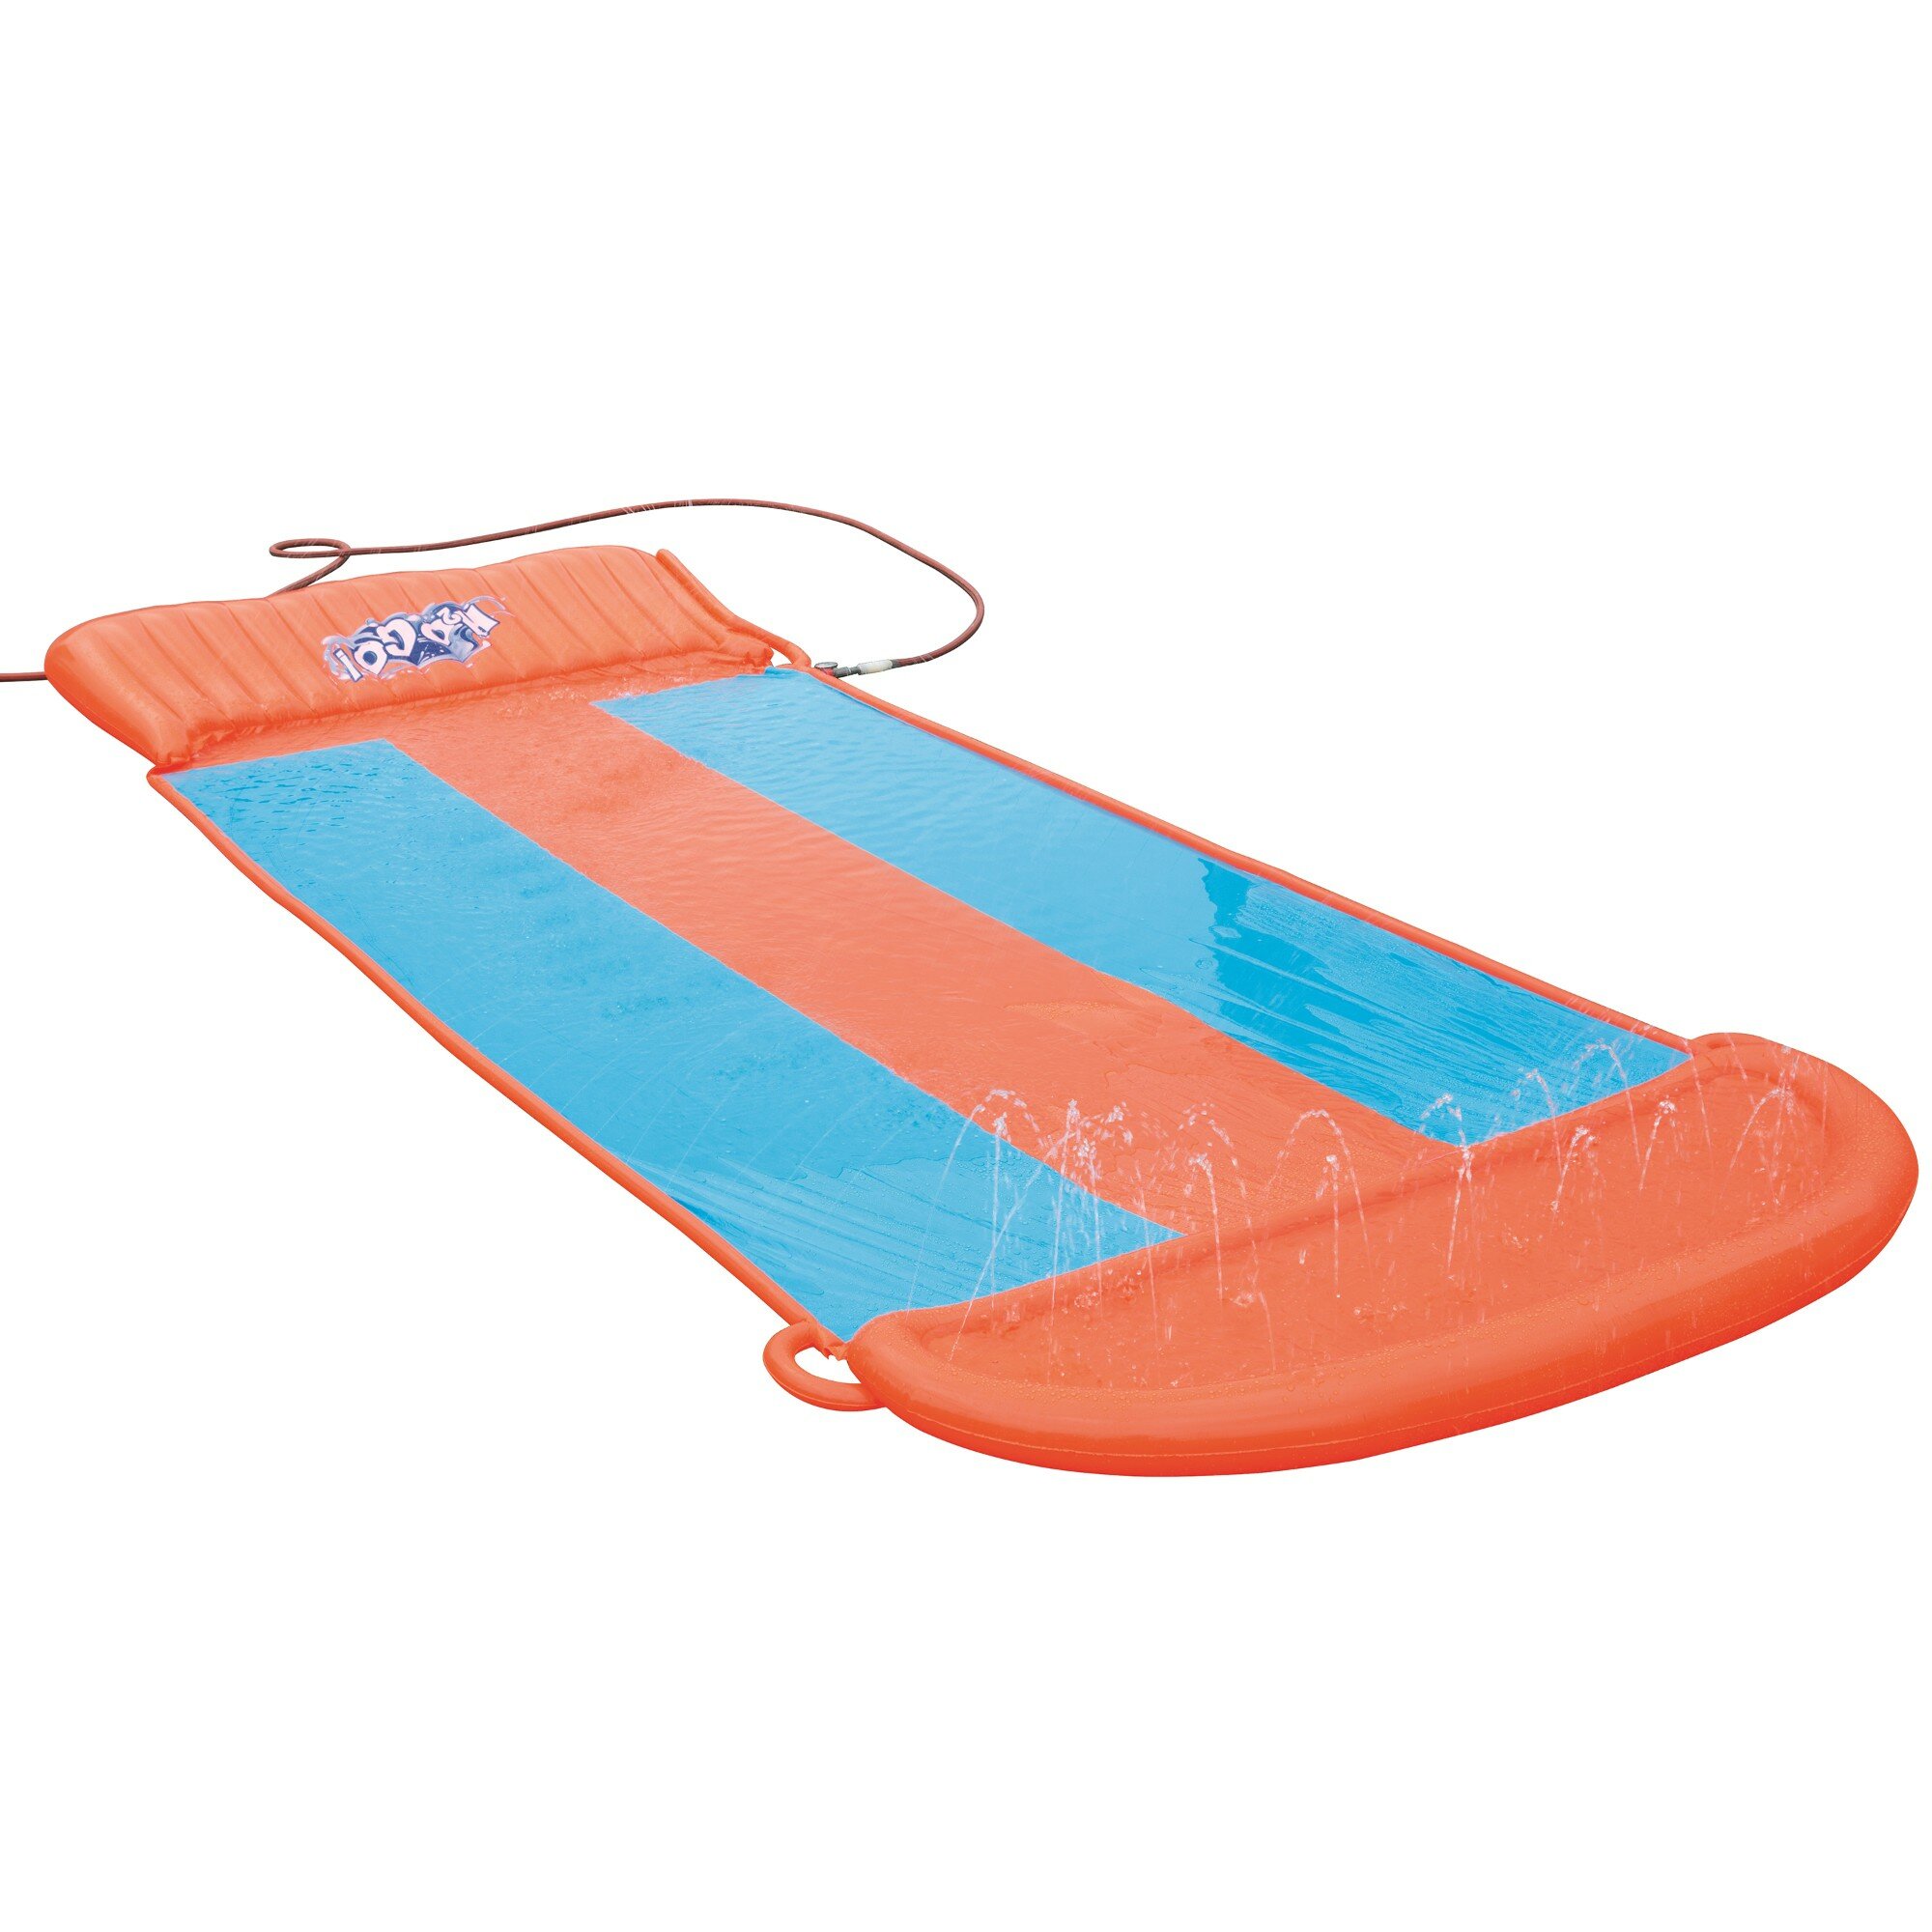 h2o go 18 ft water slide single slide w/ drench pool lawn water fun slippery NIB 